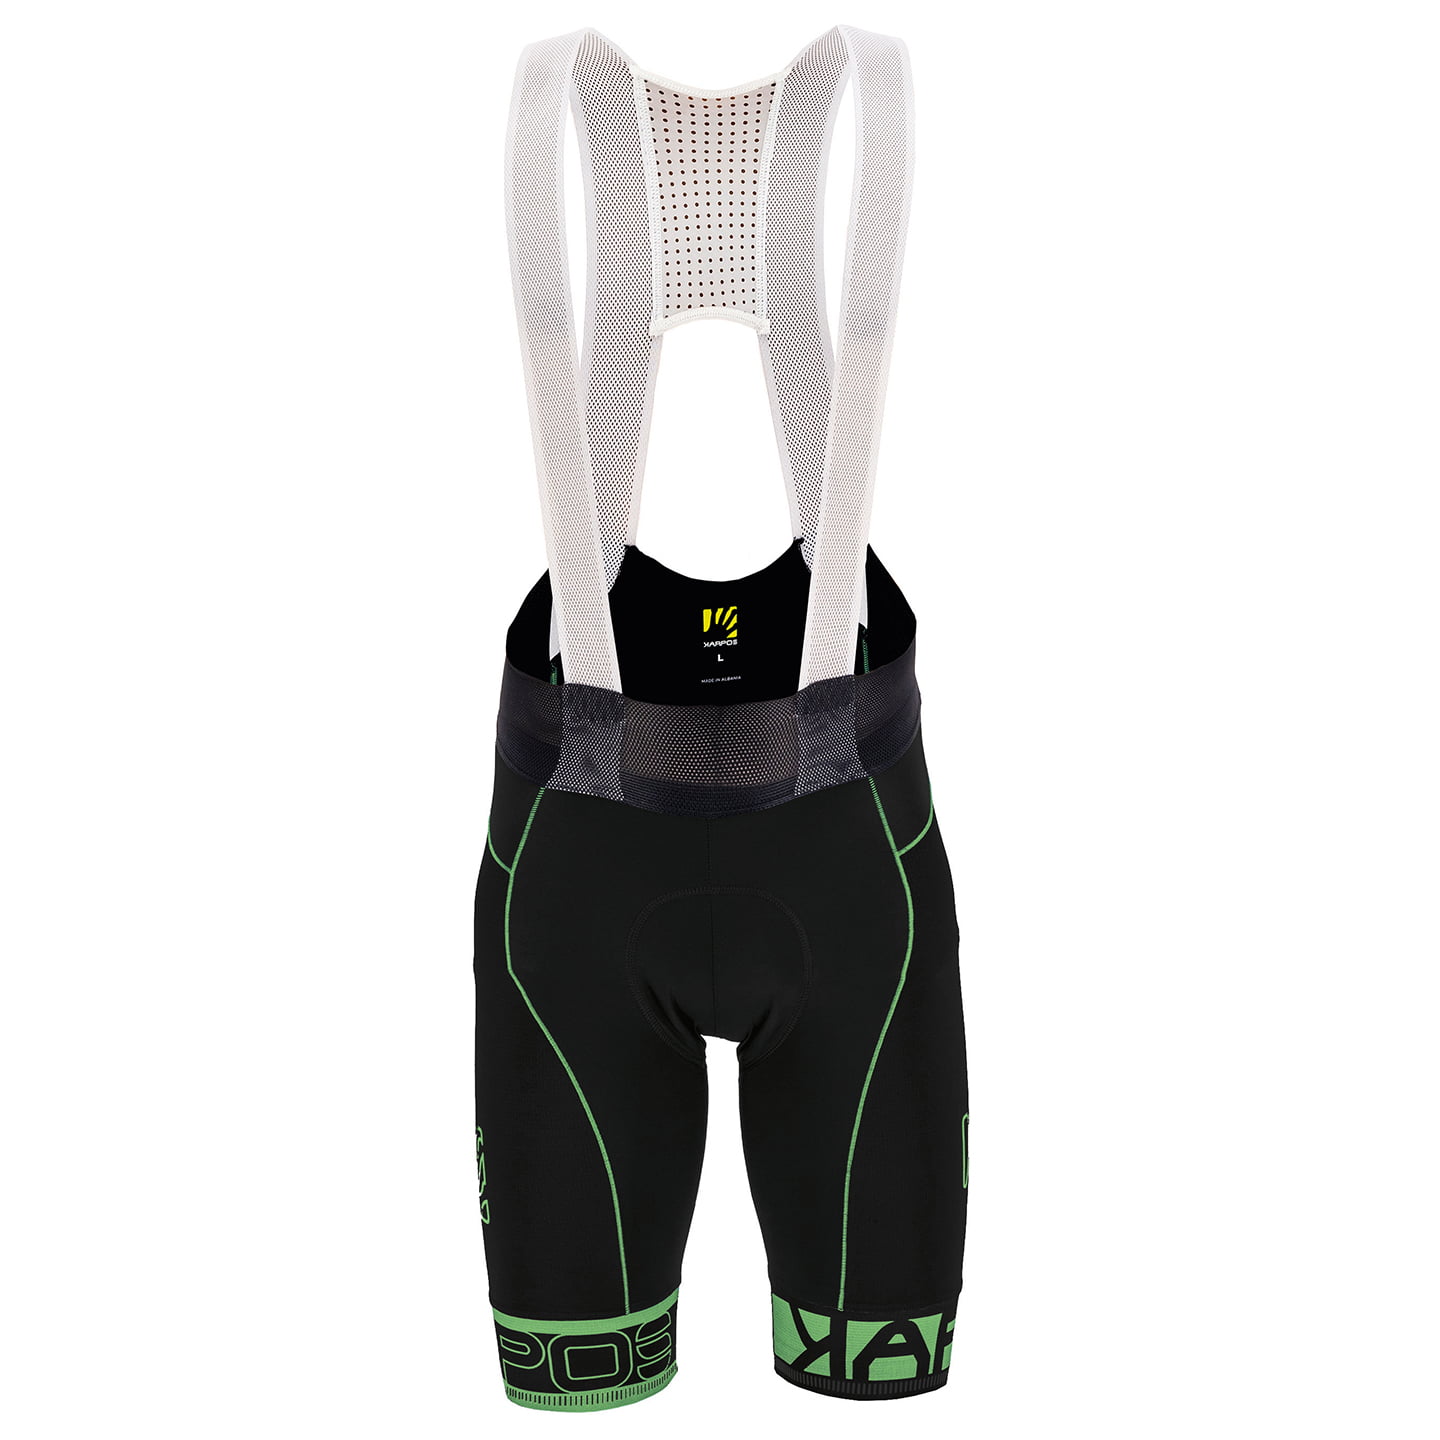 KARPOS Verve Evo Bib Shorts Bib Shorts, for men, size L, Cycle shorts, Cycling clothing